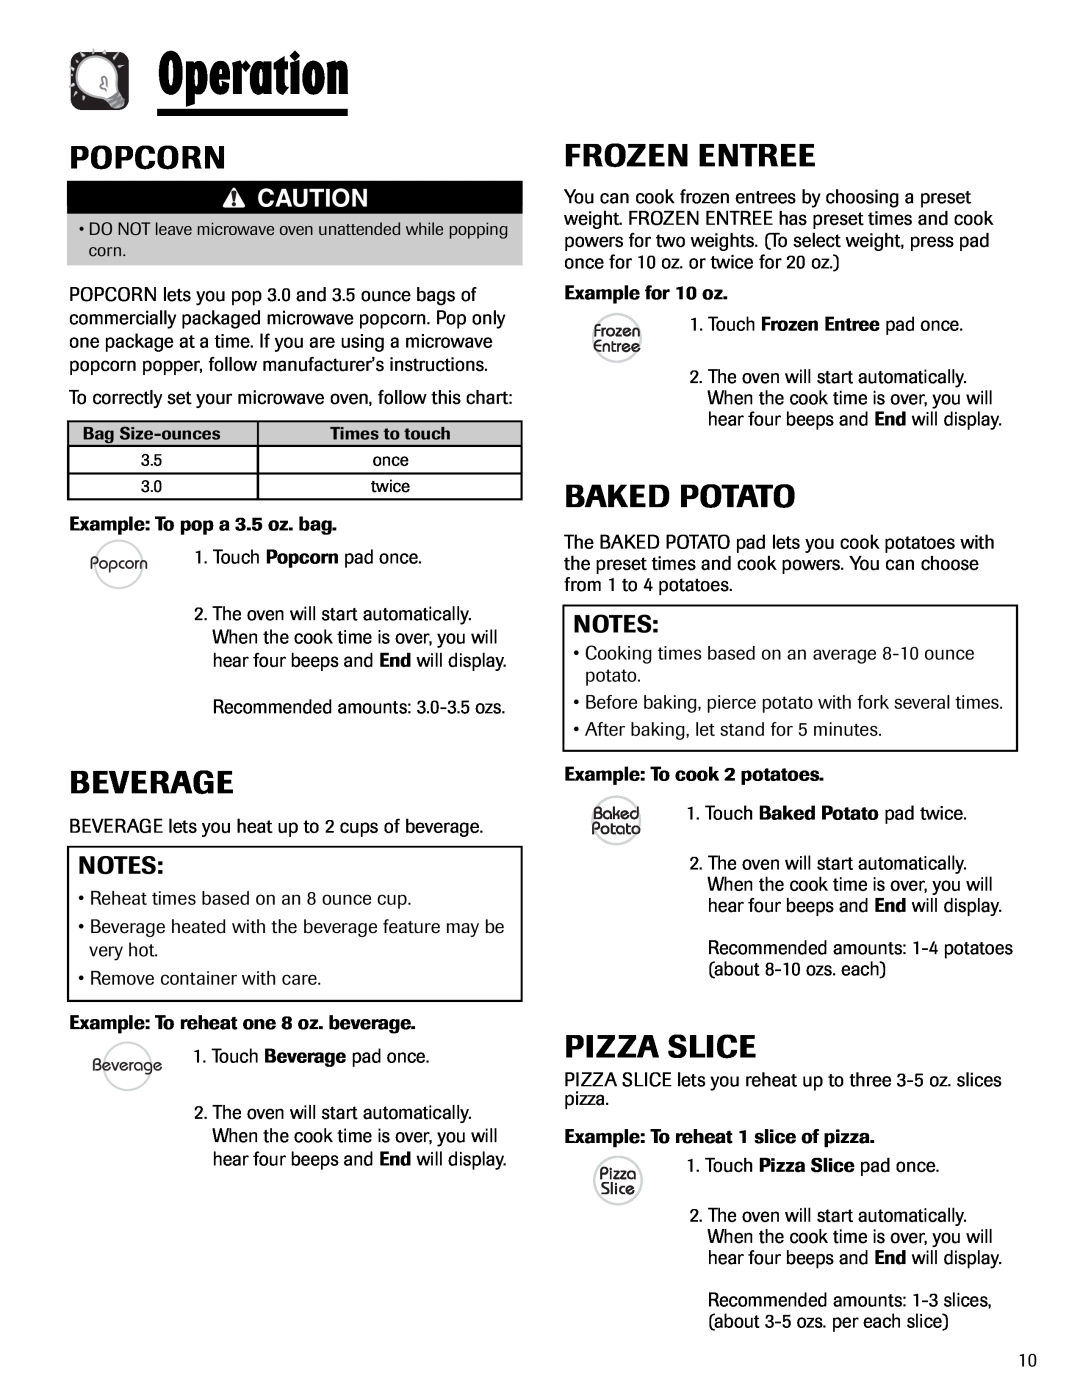 Maytag UMV1152BA important safety instructions Popcorn, Beverage, Frozen Entree, Baked Potato, Pizza Slice, Operation 